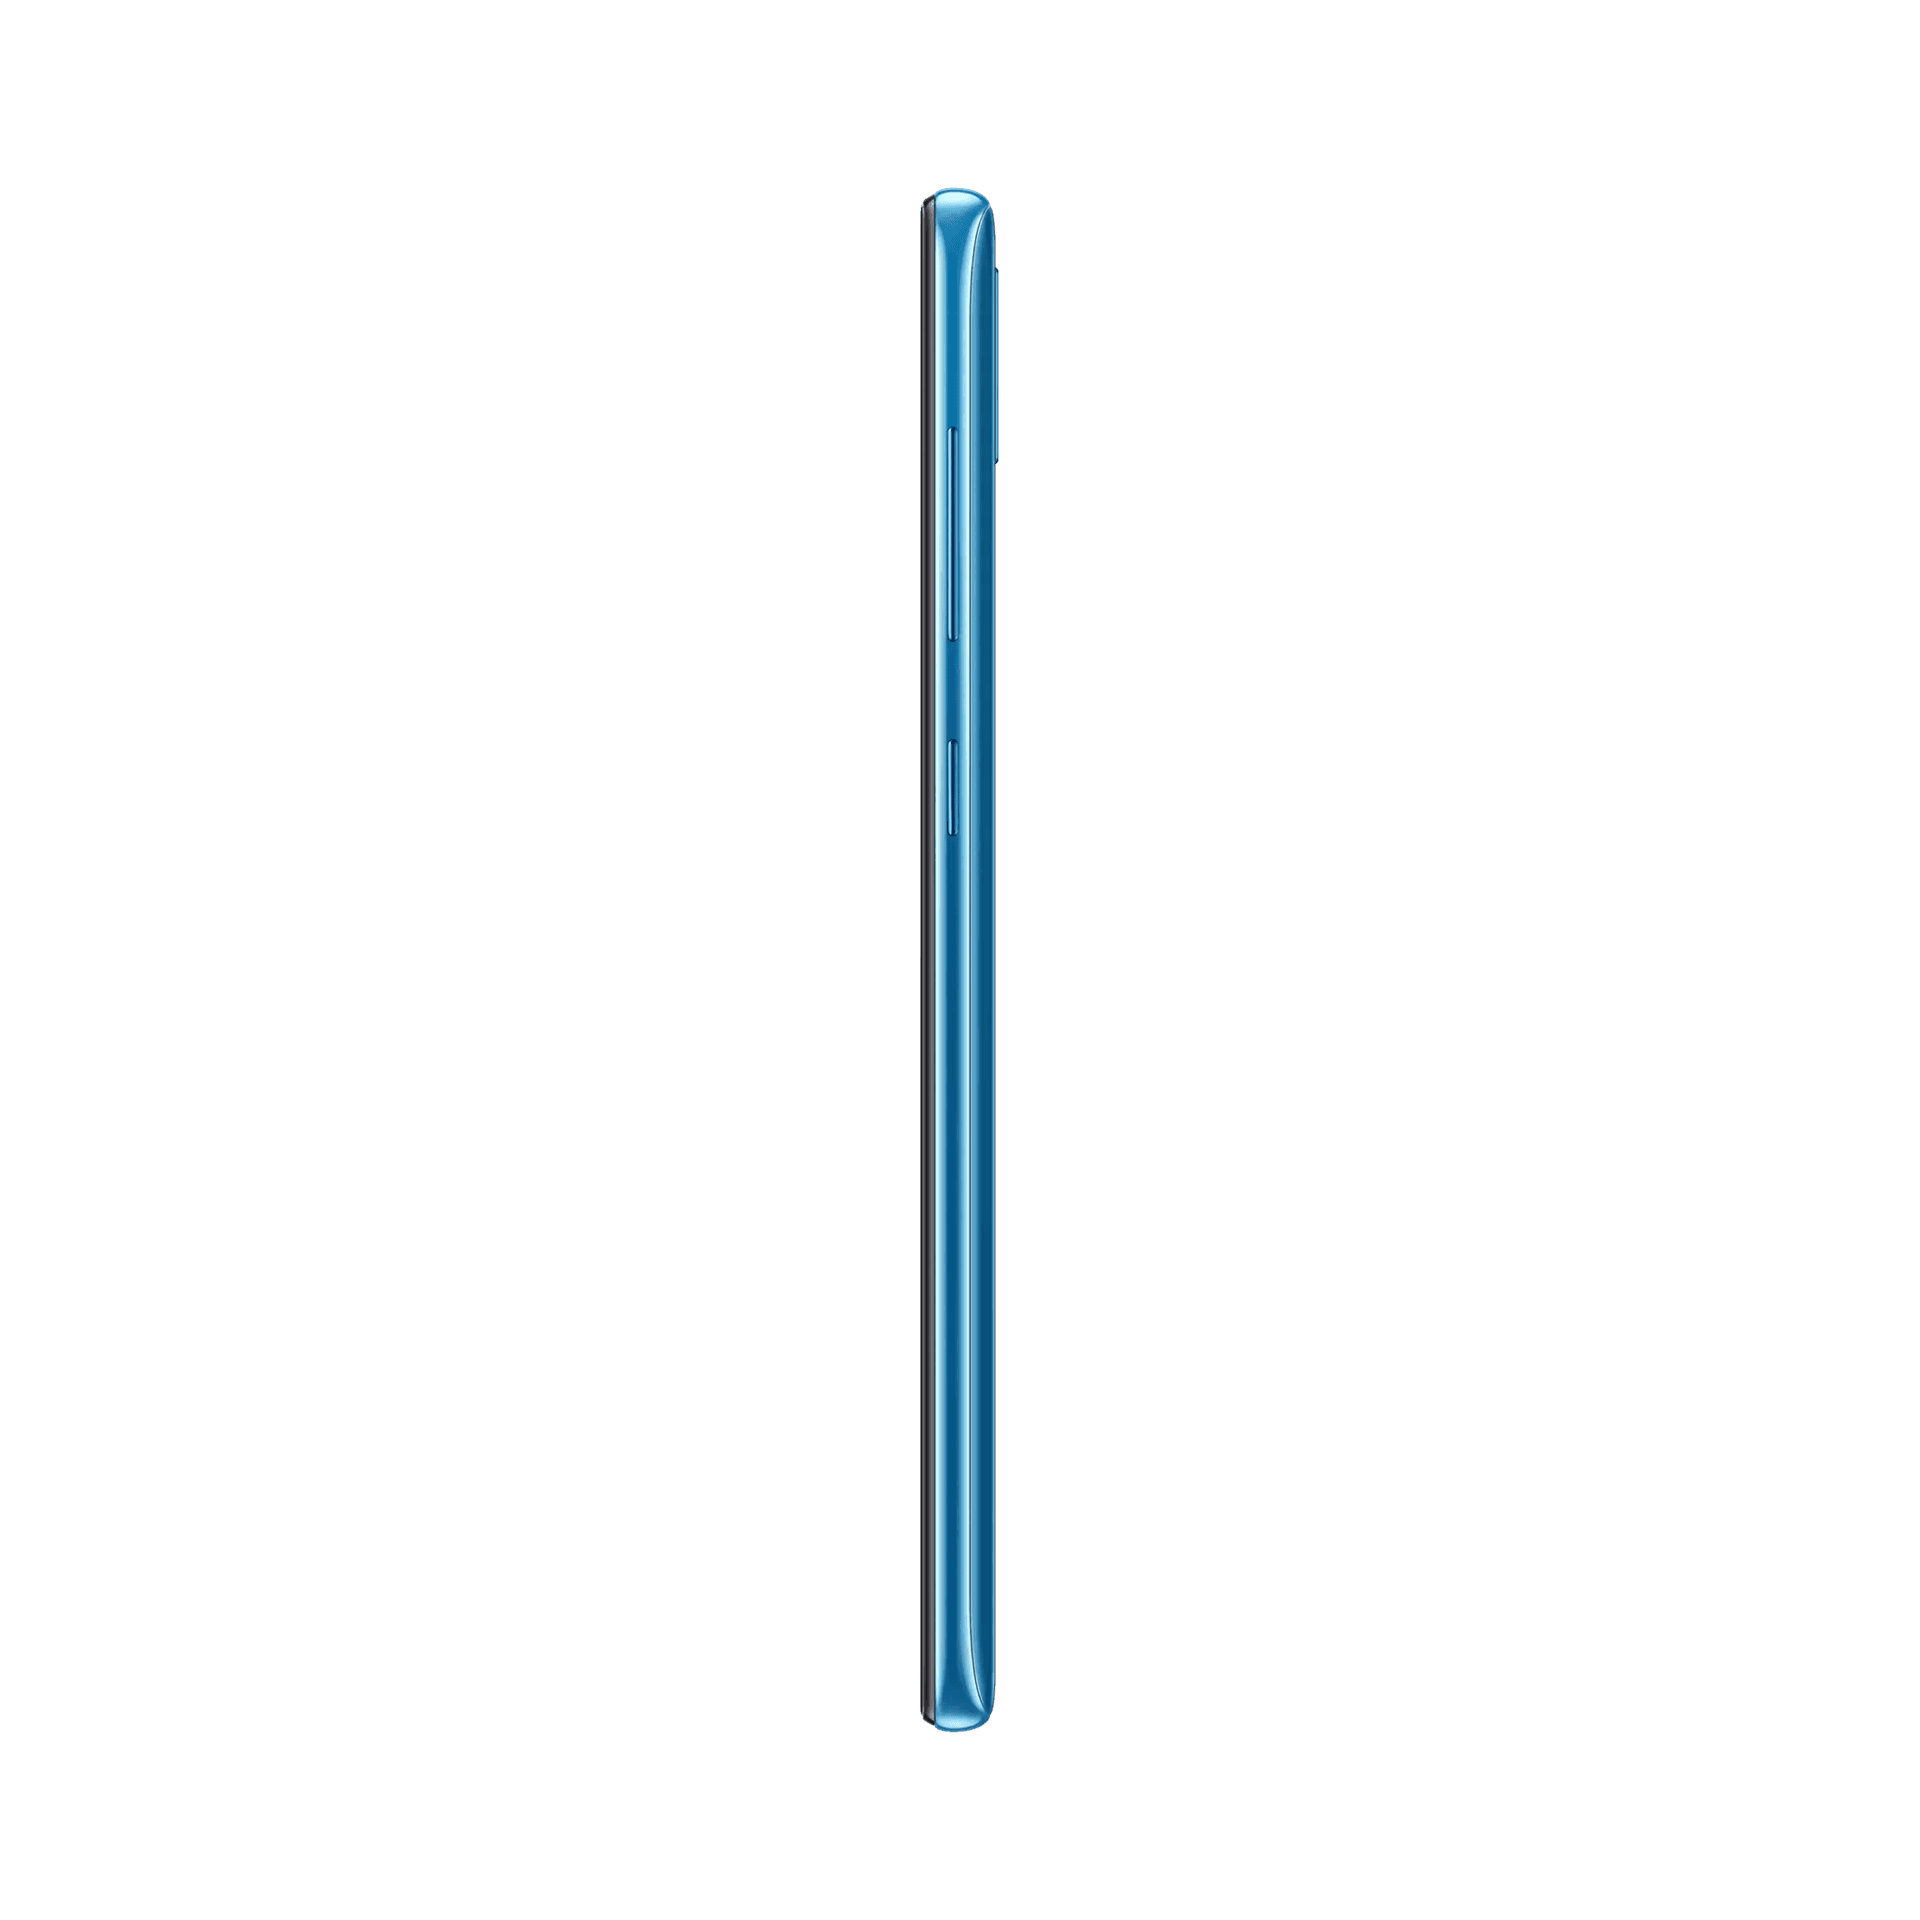 Samsung Galaxy A30 - 32 GB - Mavi